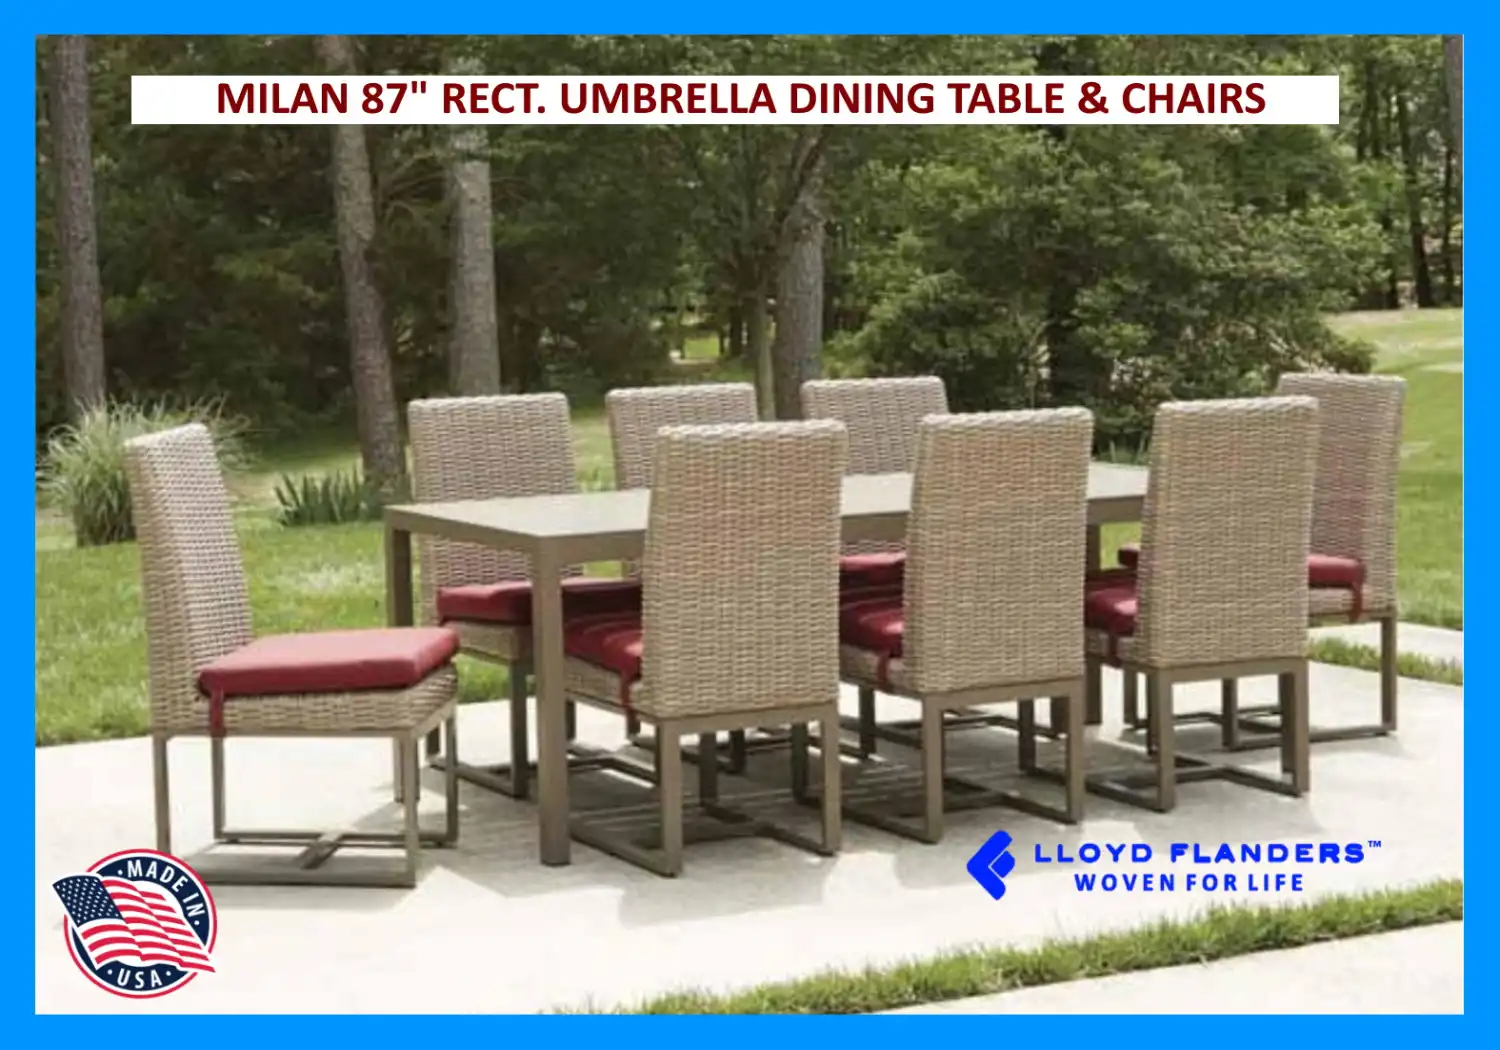 MILAN 87" RECTANGULAR UMBRELLA DINING TABLE & CHAIRS